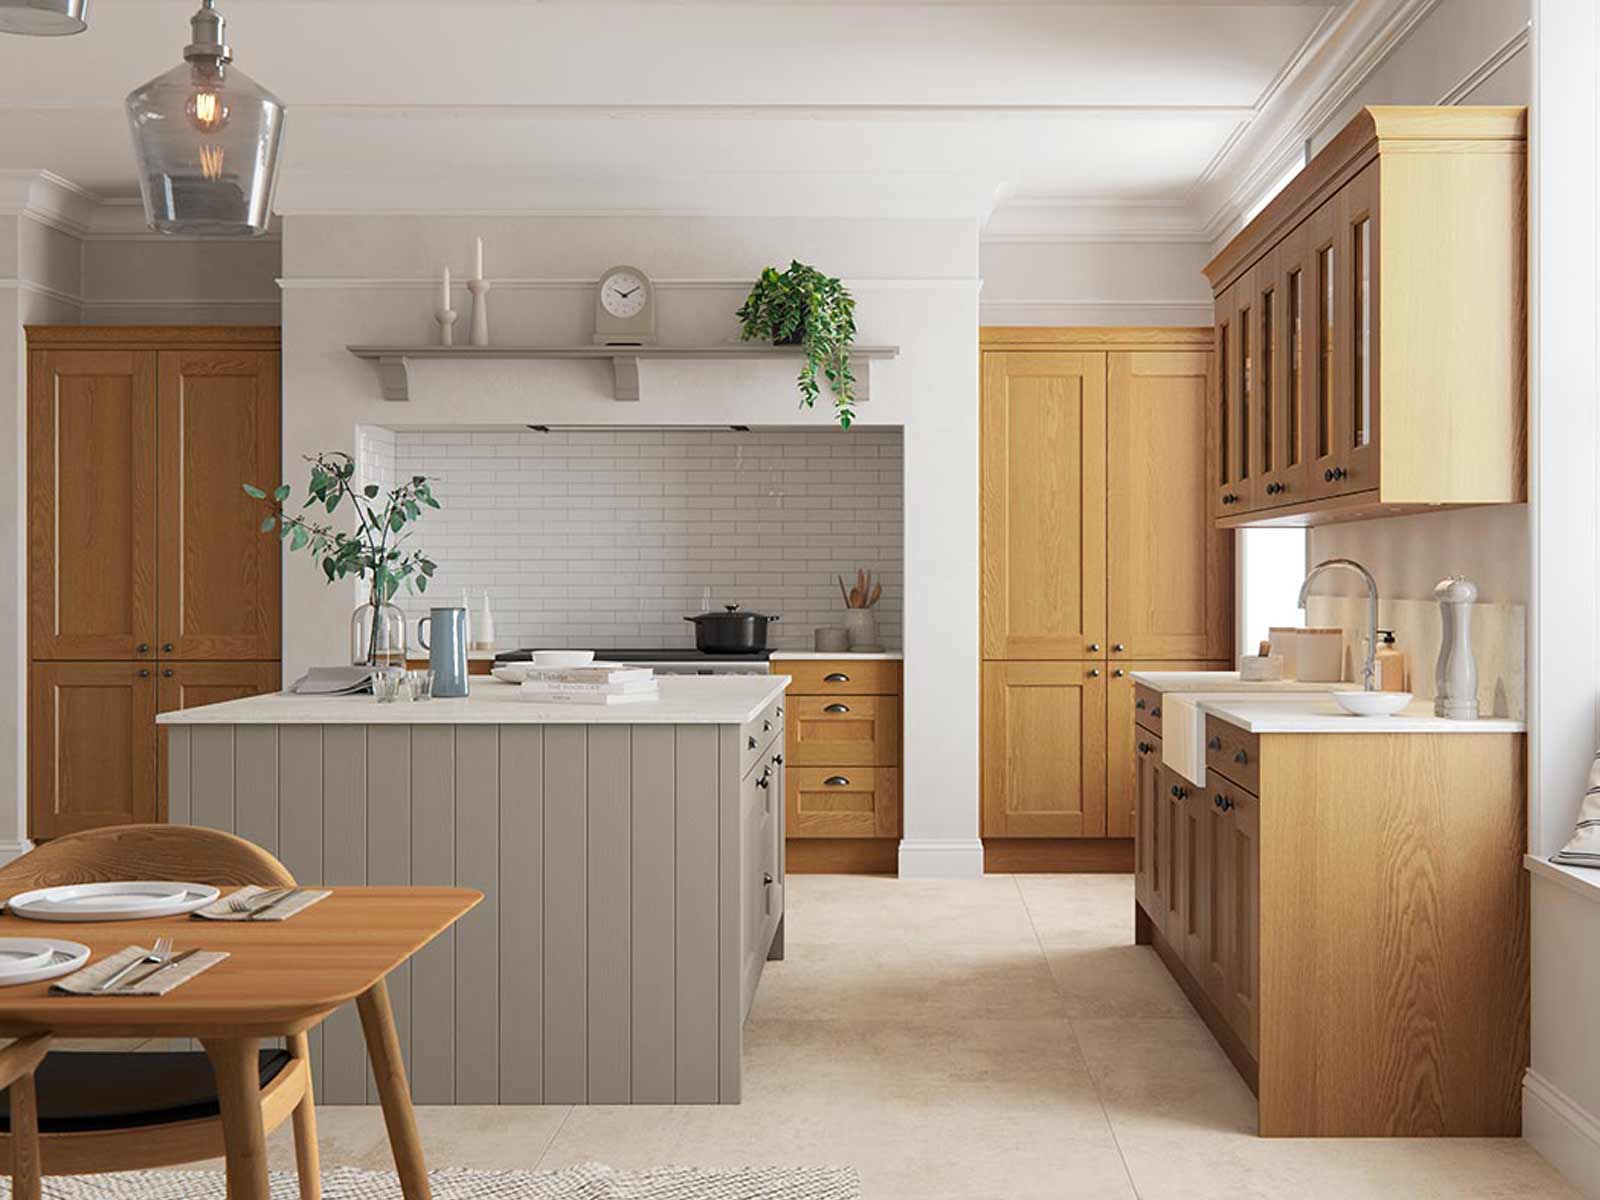 Modern light grey shaker kitchen island in oak kitchen